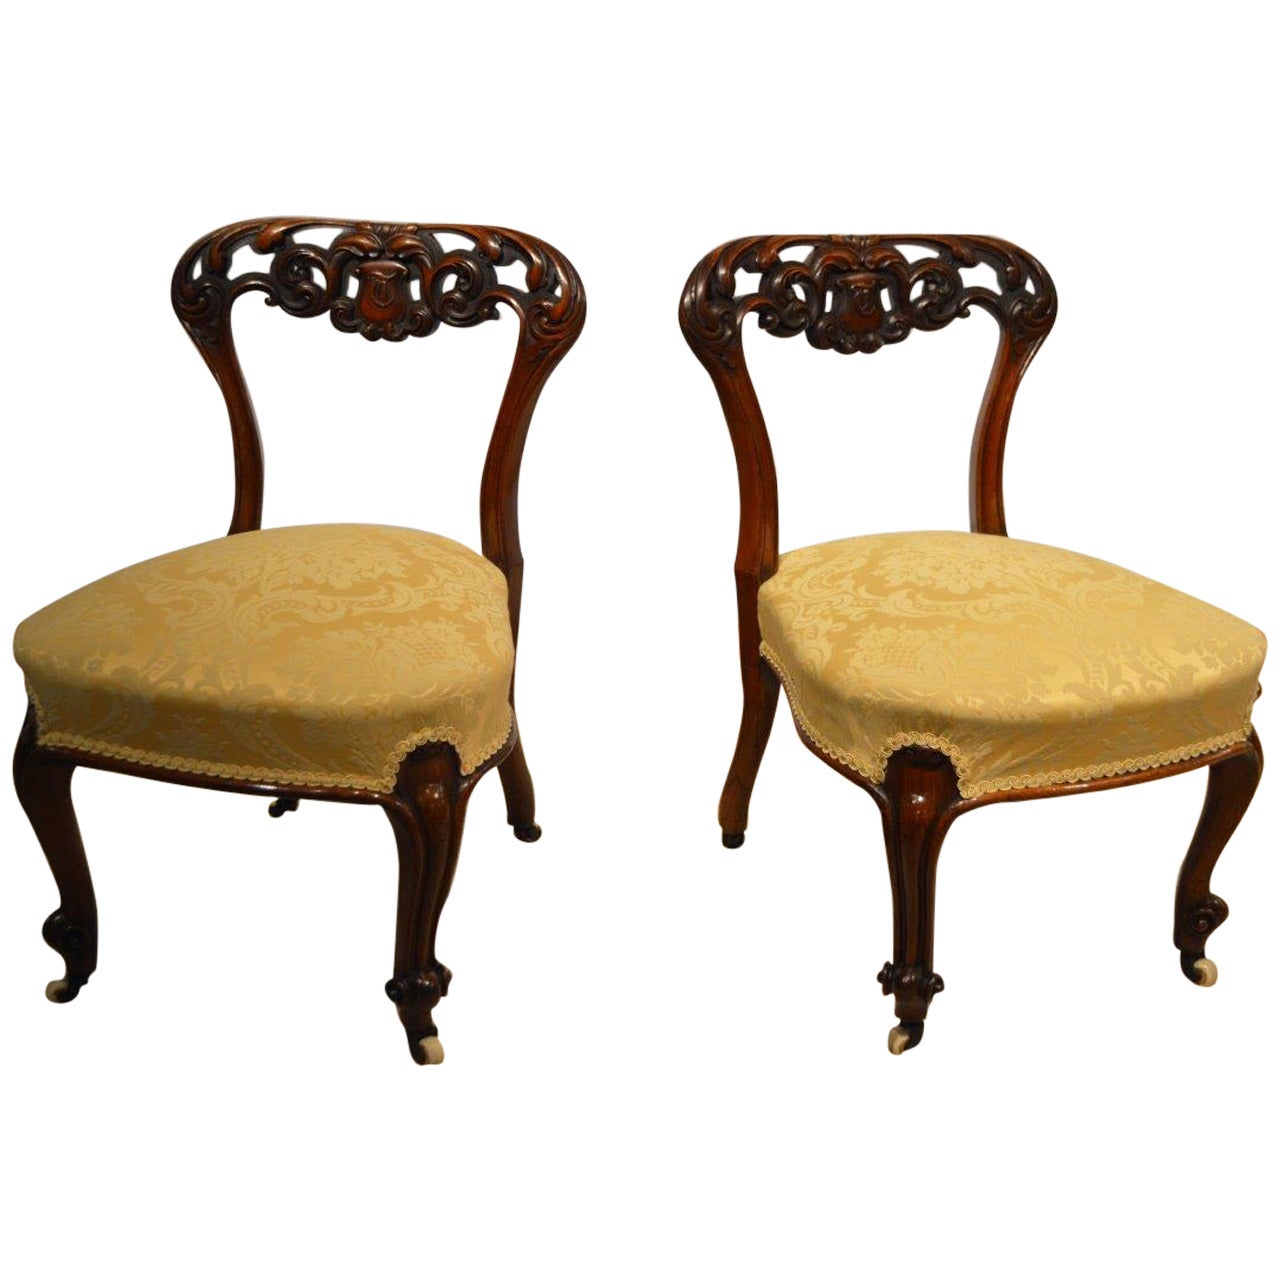 Beautiful Pair of Small Walnut Victorian Period Nursing Chairs